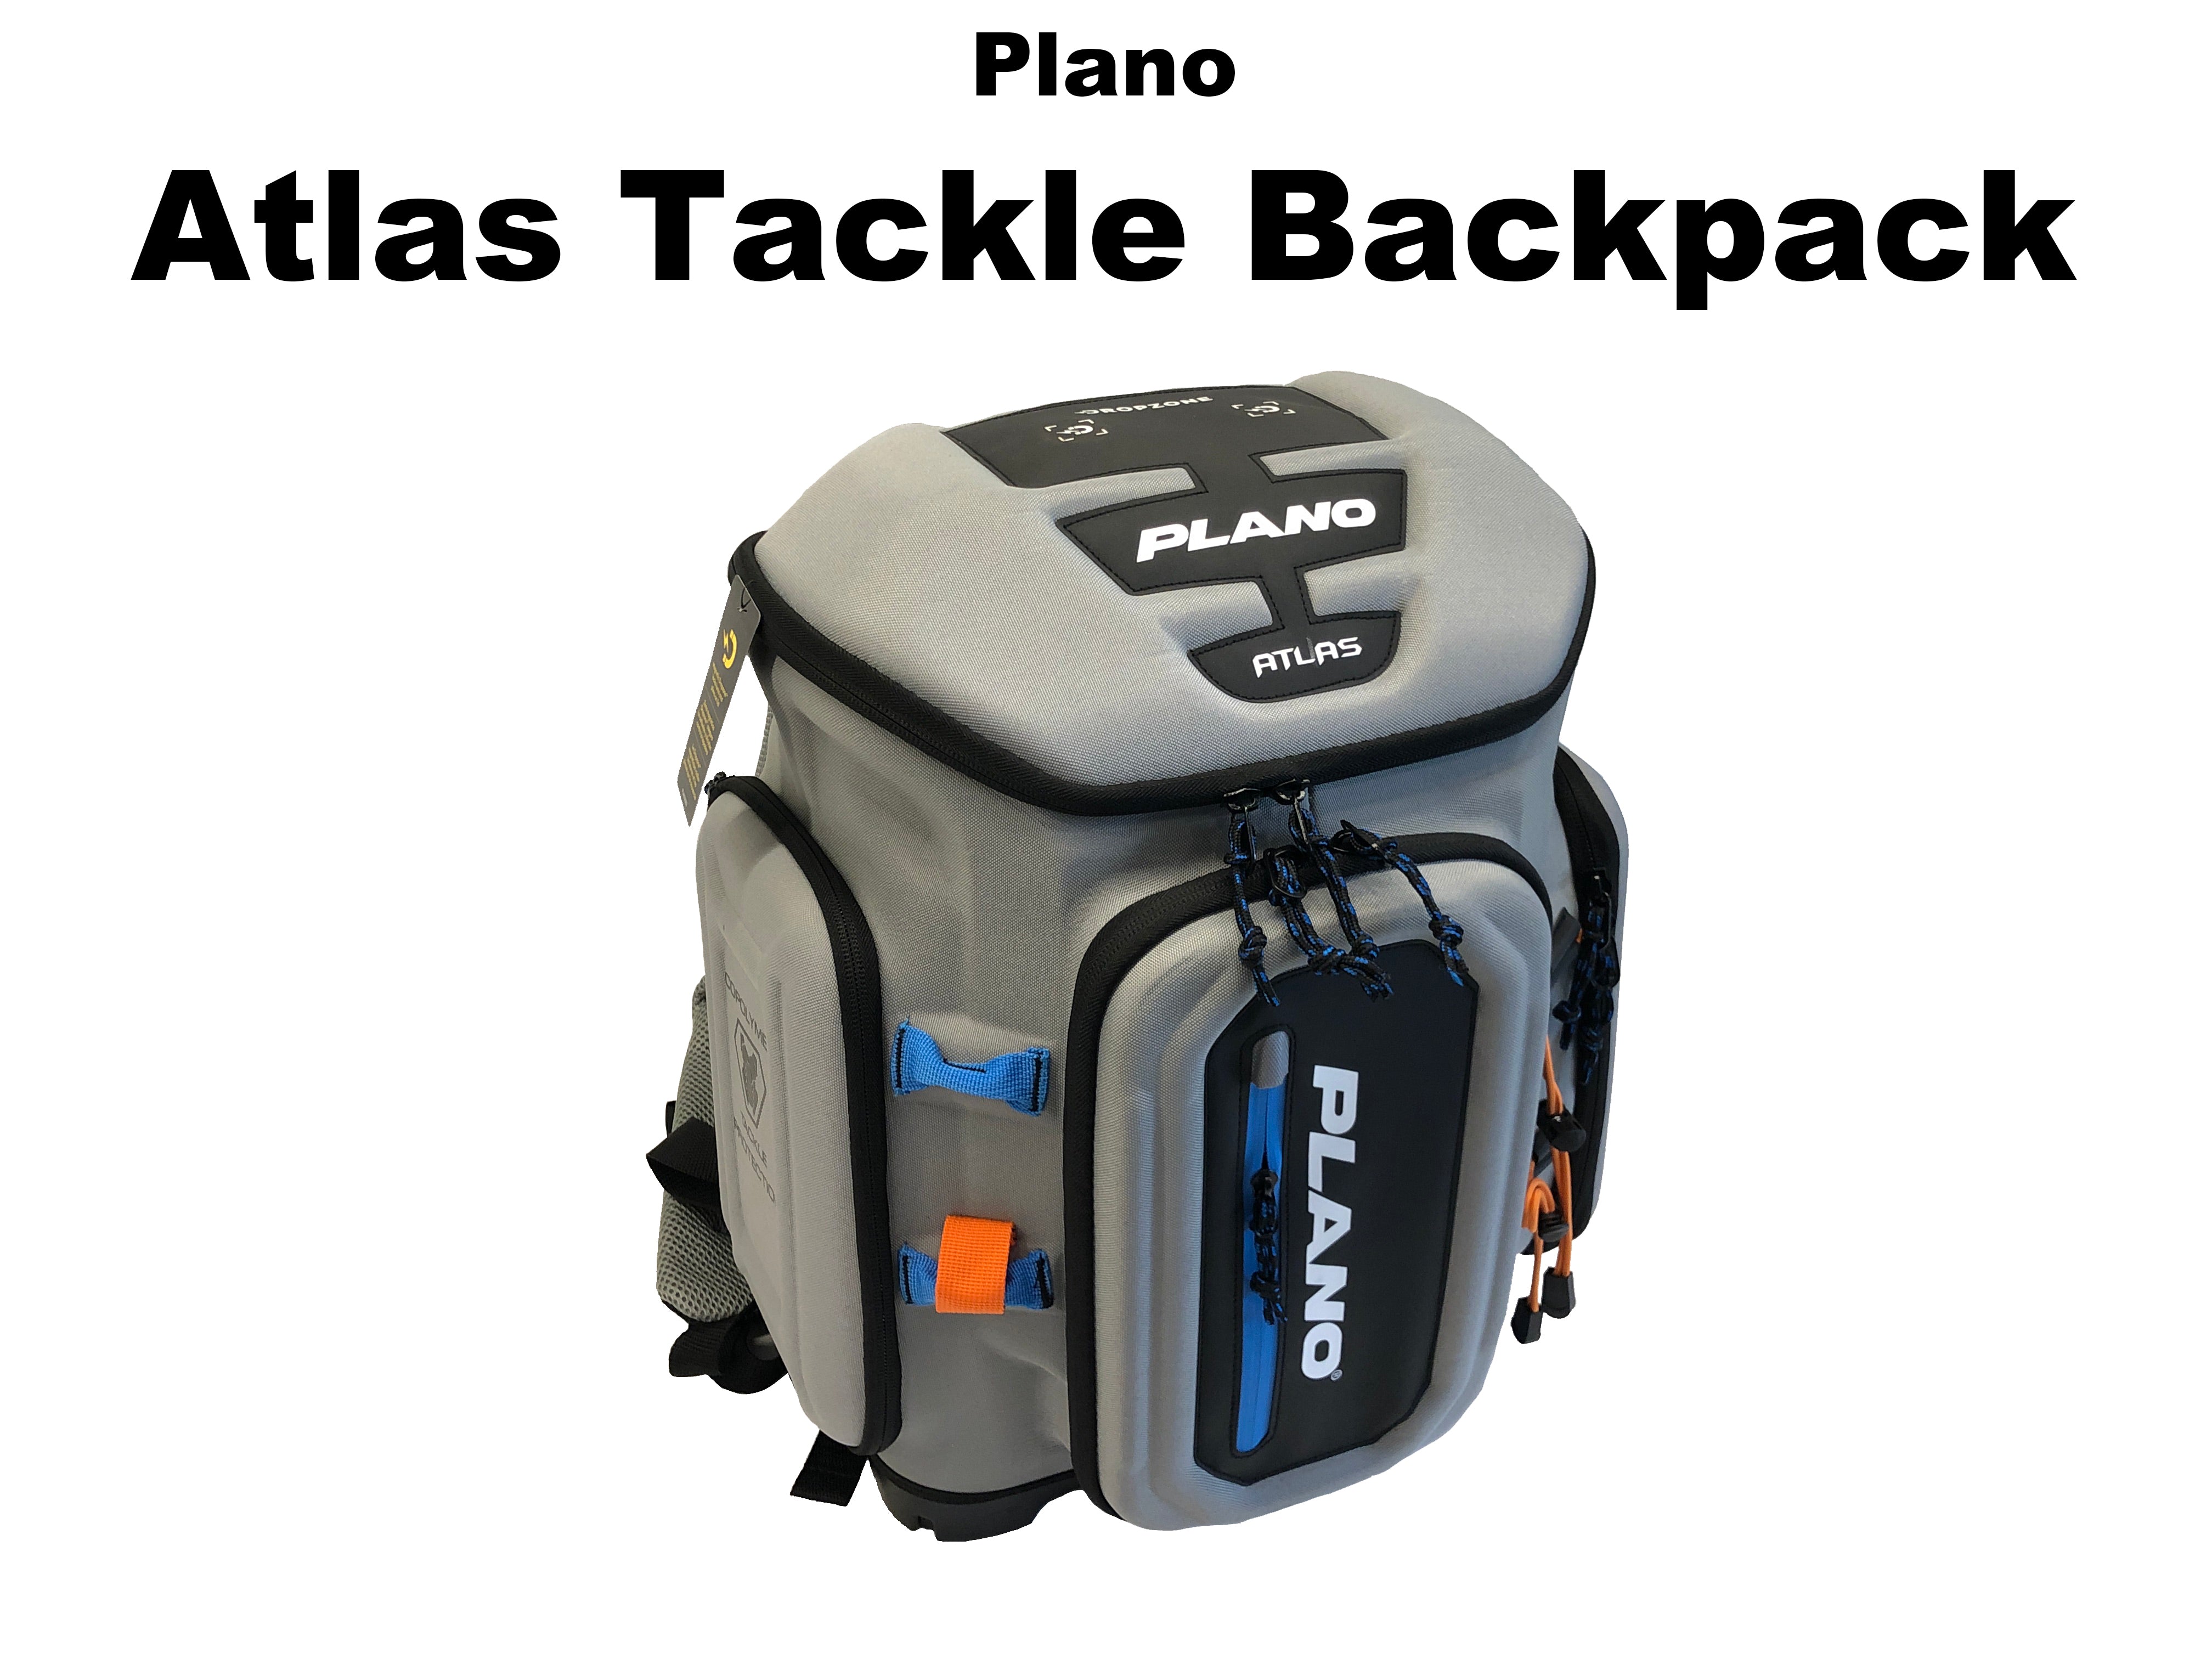 Atlas 3700 Tackle Backpack